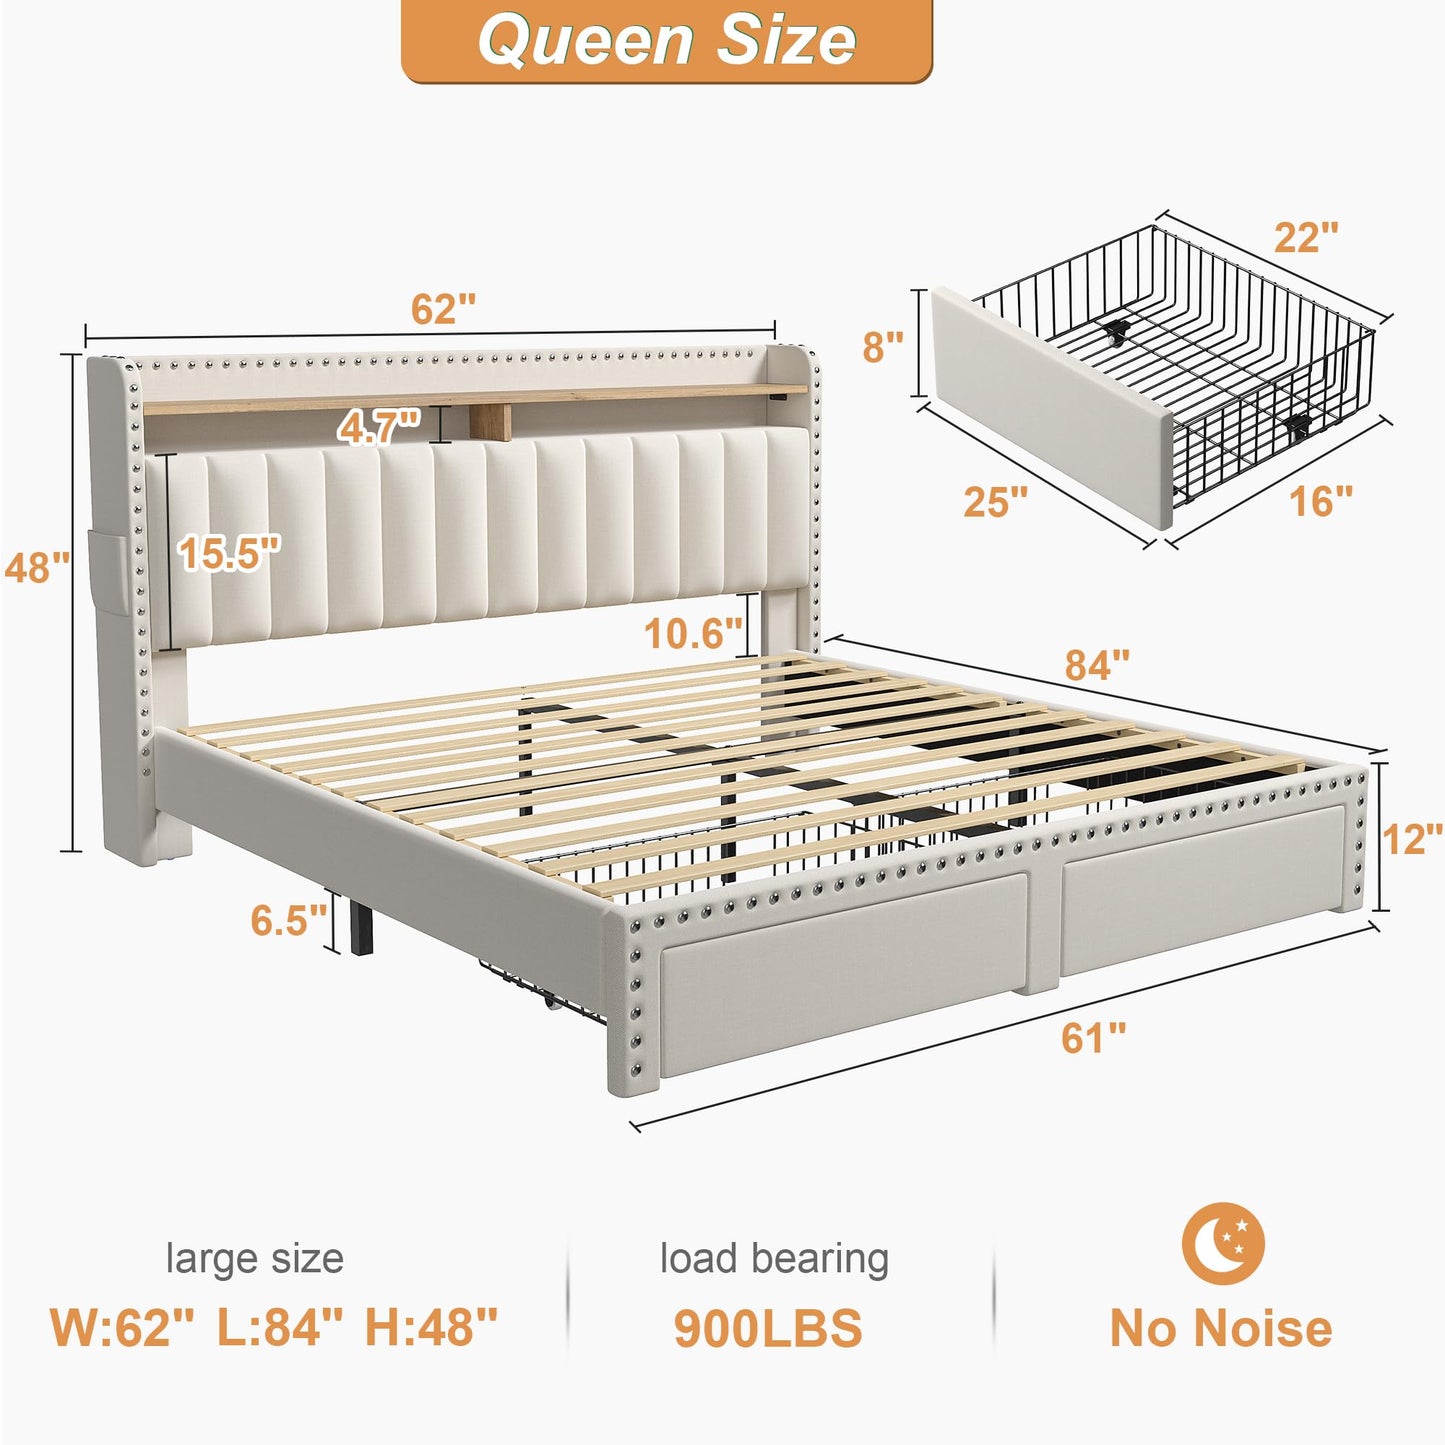 Hana Exports Queen Bed Frame with Headboard and Storage, Upholstered Queen Bed Frame with Storage, Queen Size Bed Frame with 2 Drawers, Queen Size Bed Frame with Storage, NO Noise,No Box Spring Needed